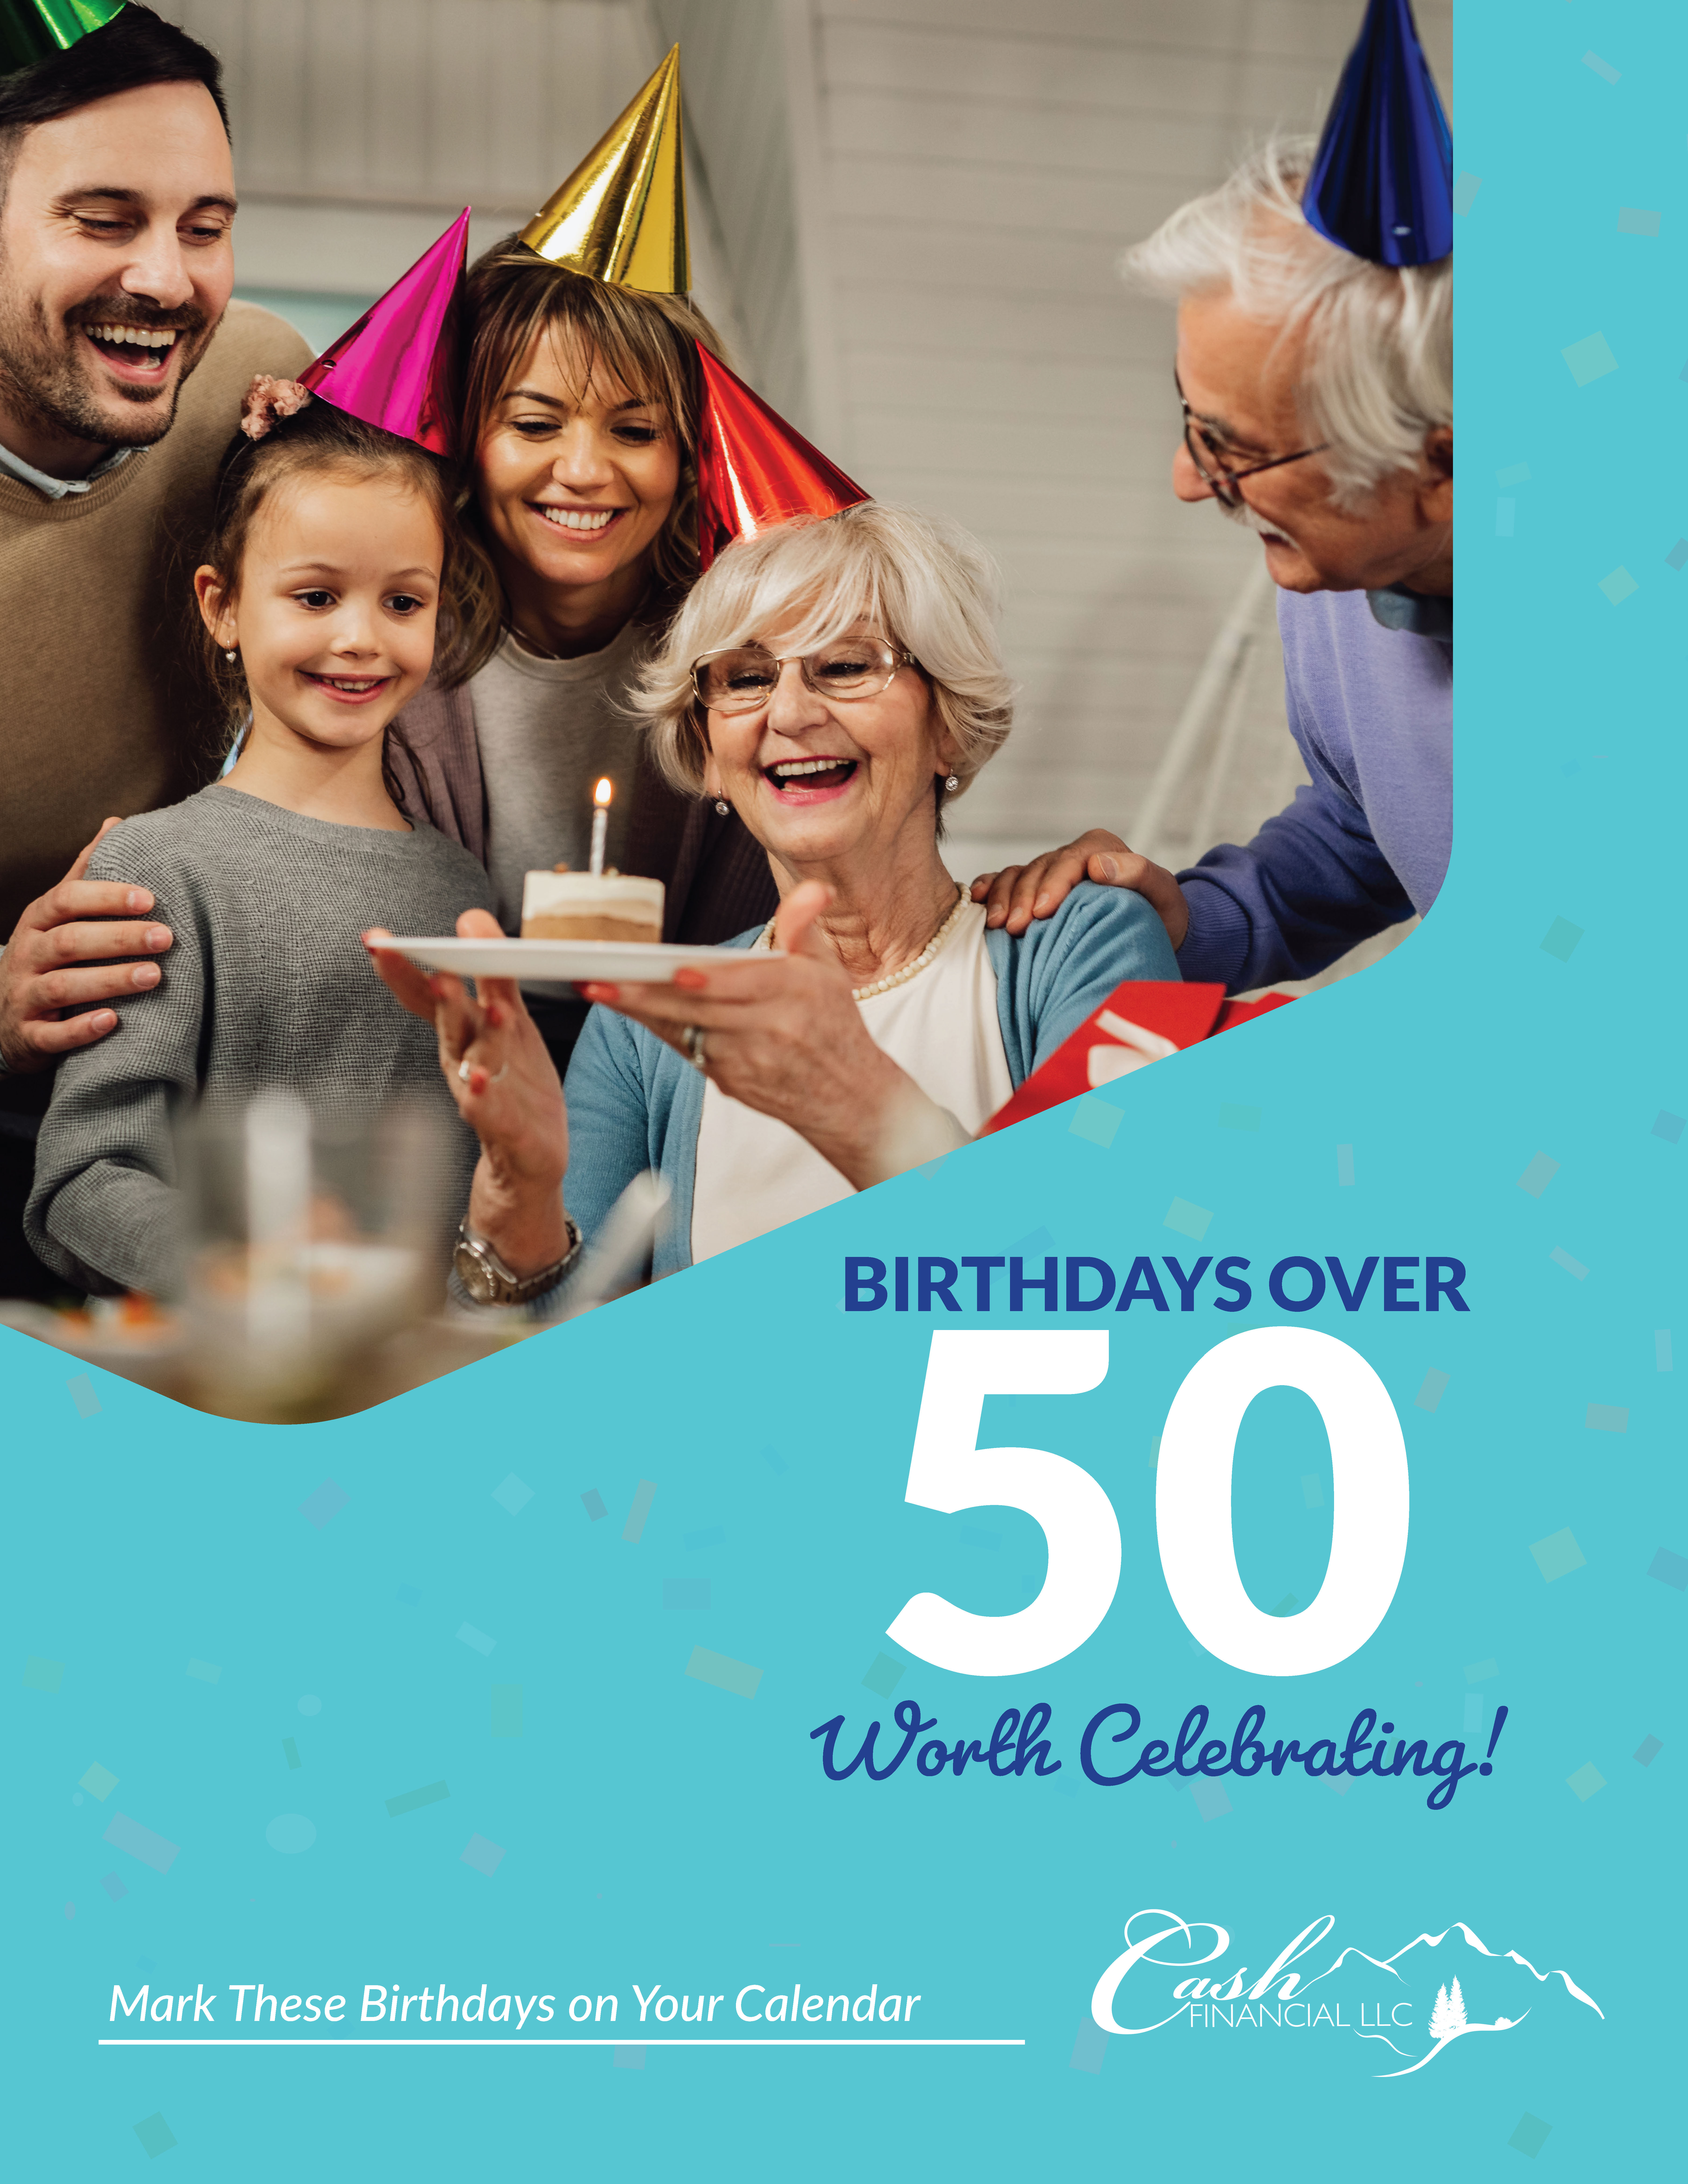 Birthdays over 50 Worth Celebrating